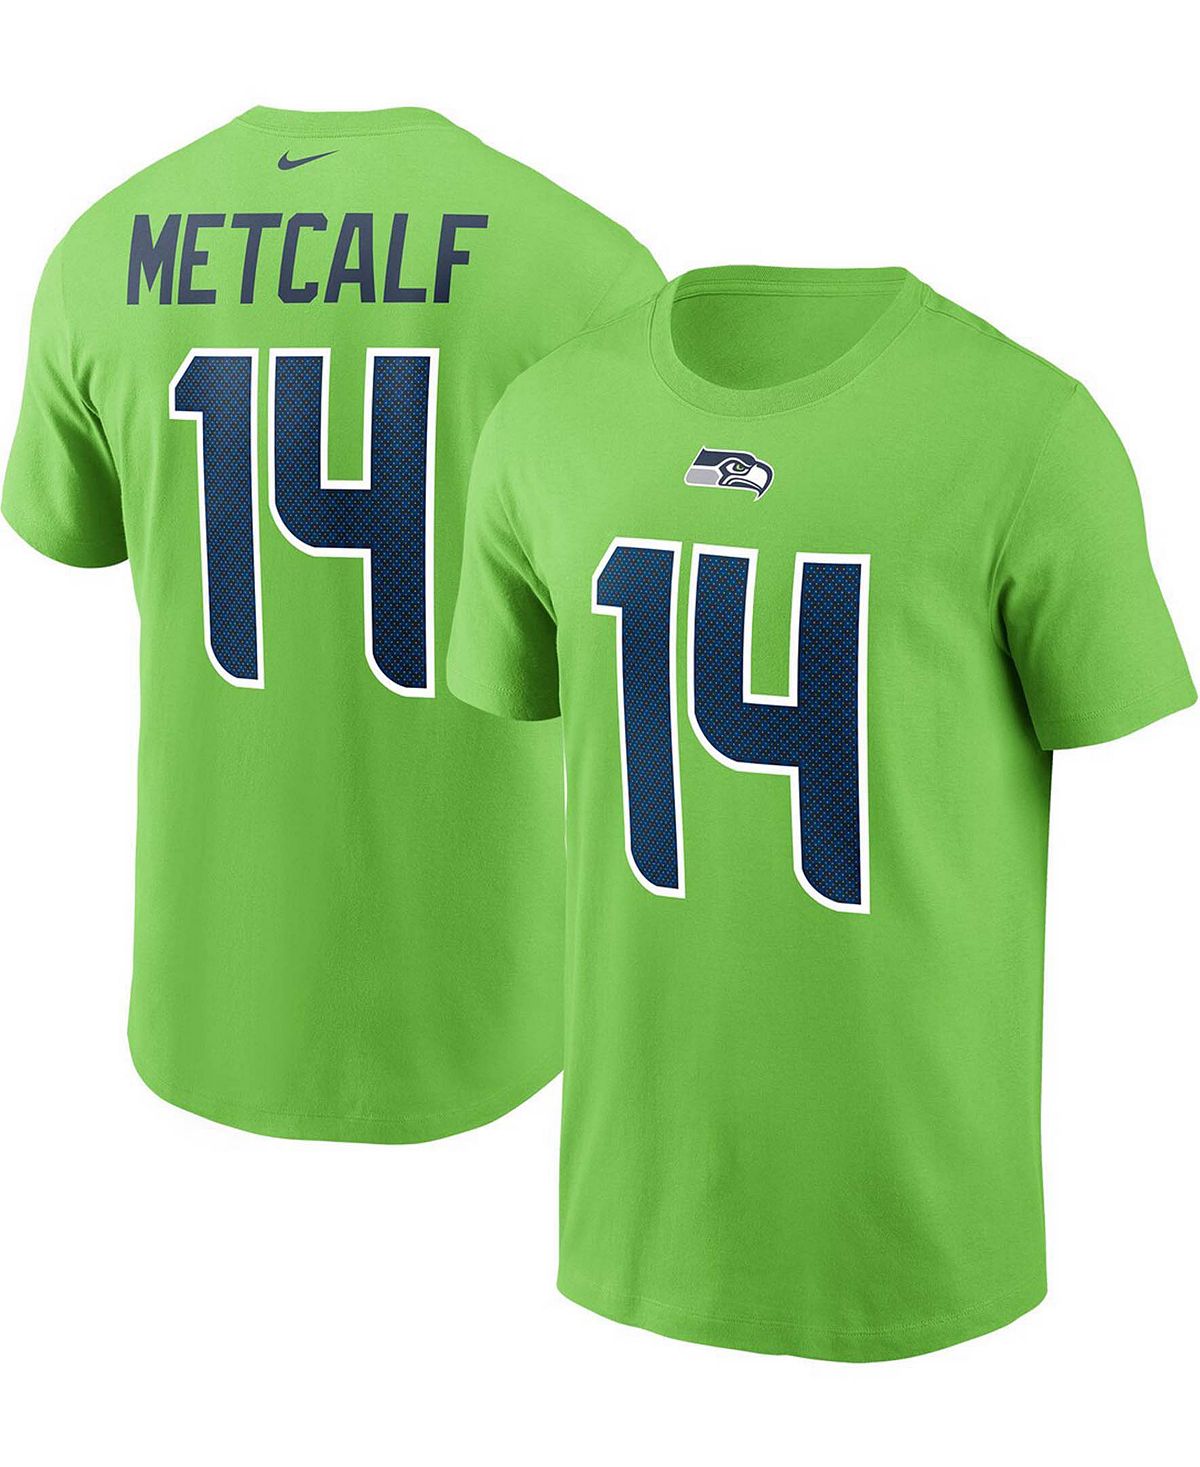 Мужская футболка DK Metcalf Neon Green Seattle Seahawks с именем и номером Nike